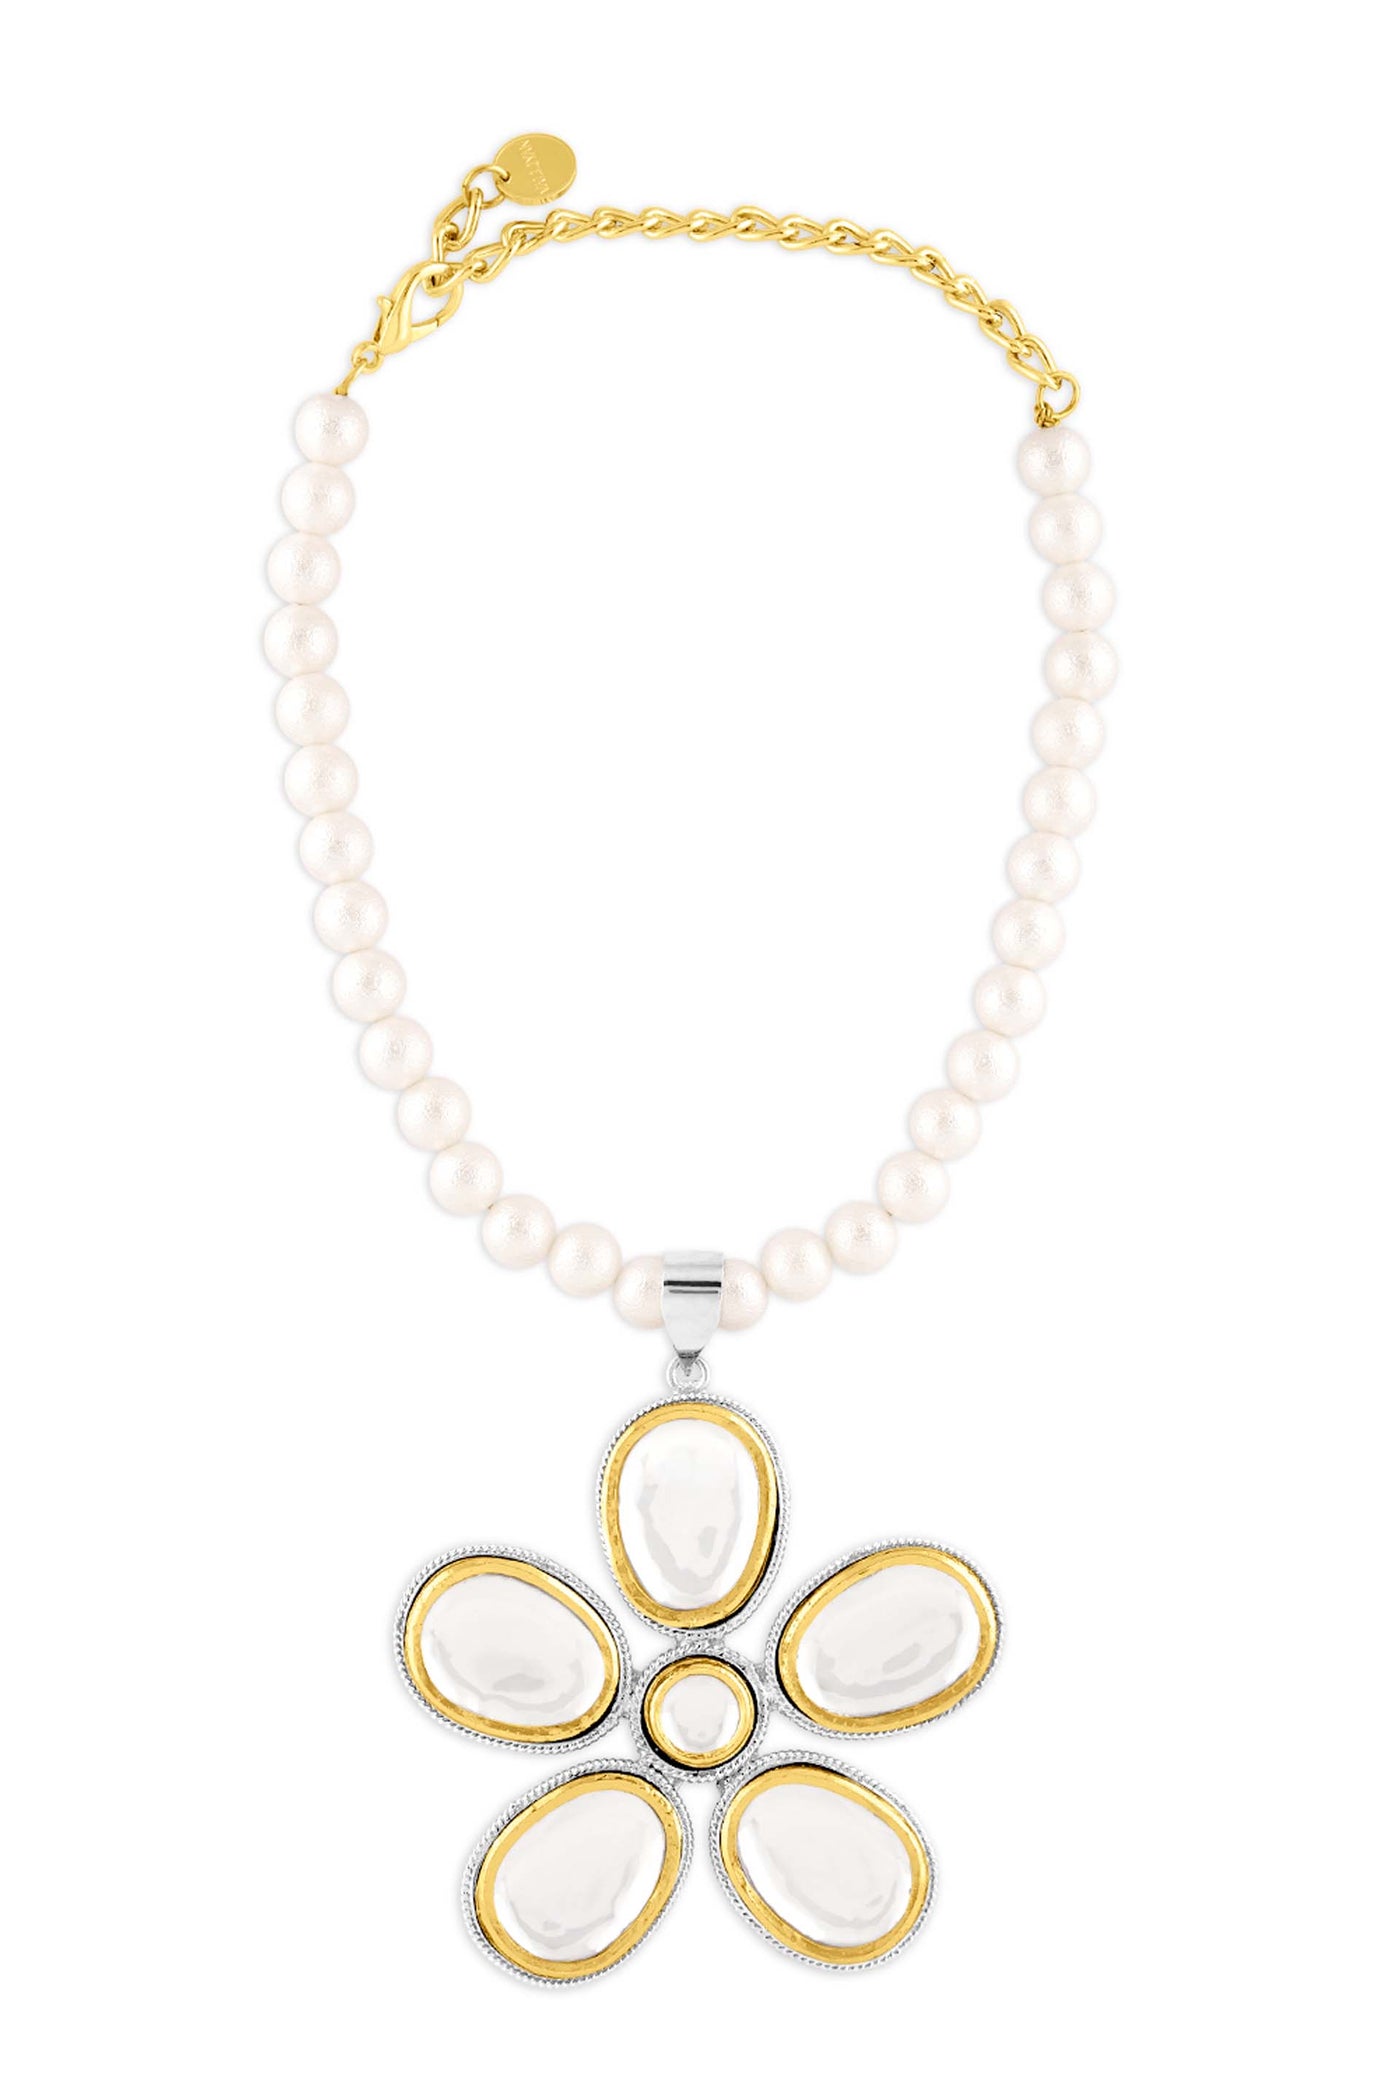 Valliyan polki flower necklace fashion jewellery online shopping melange singapore indian designer wear